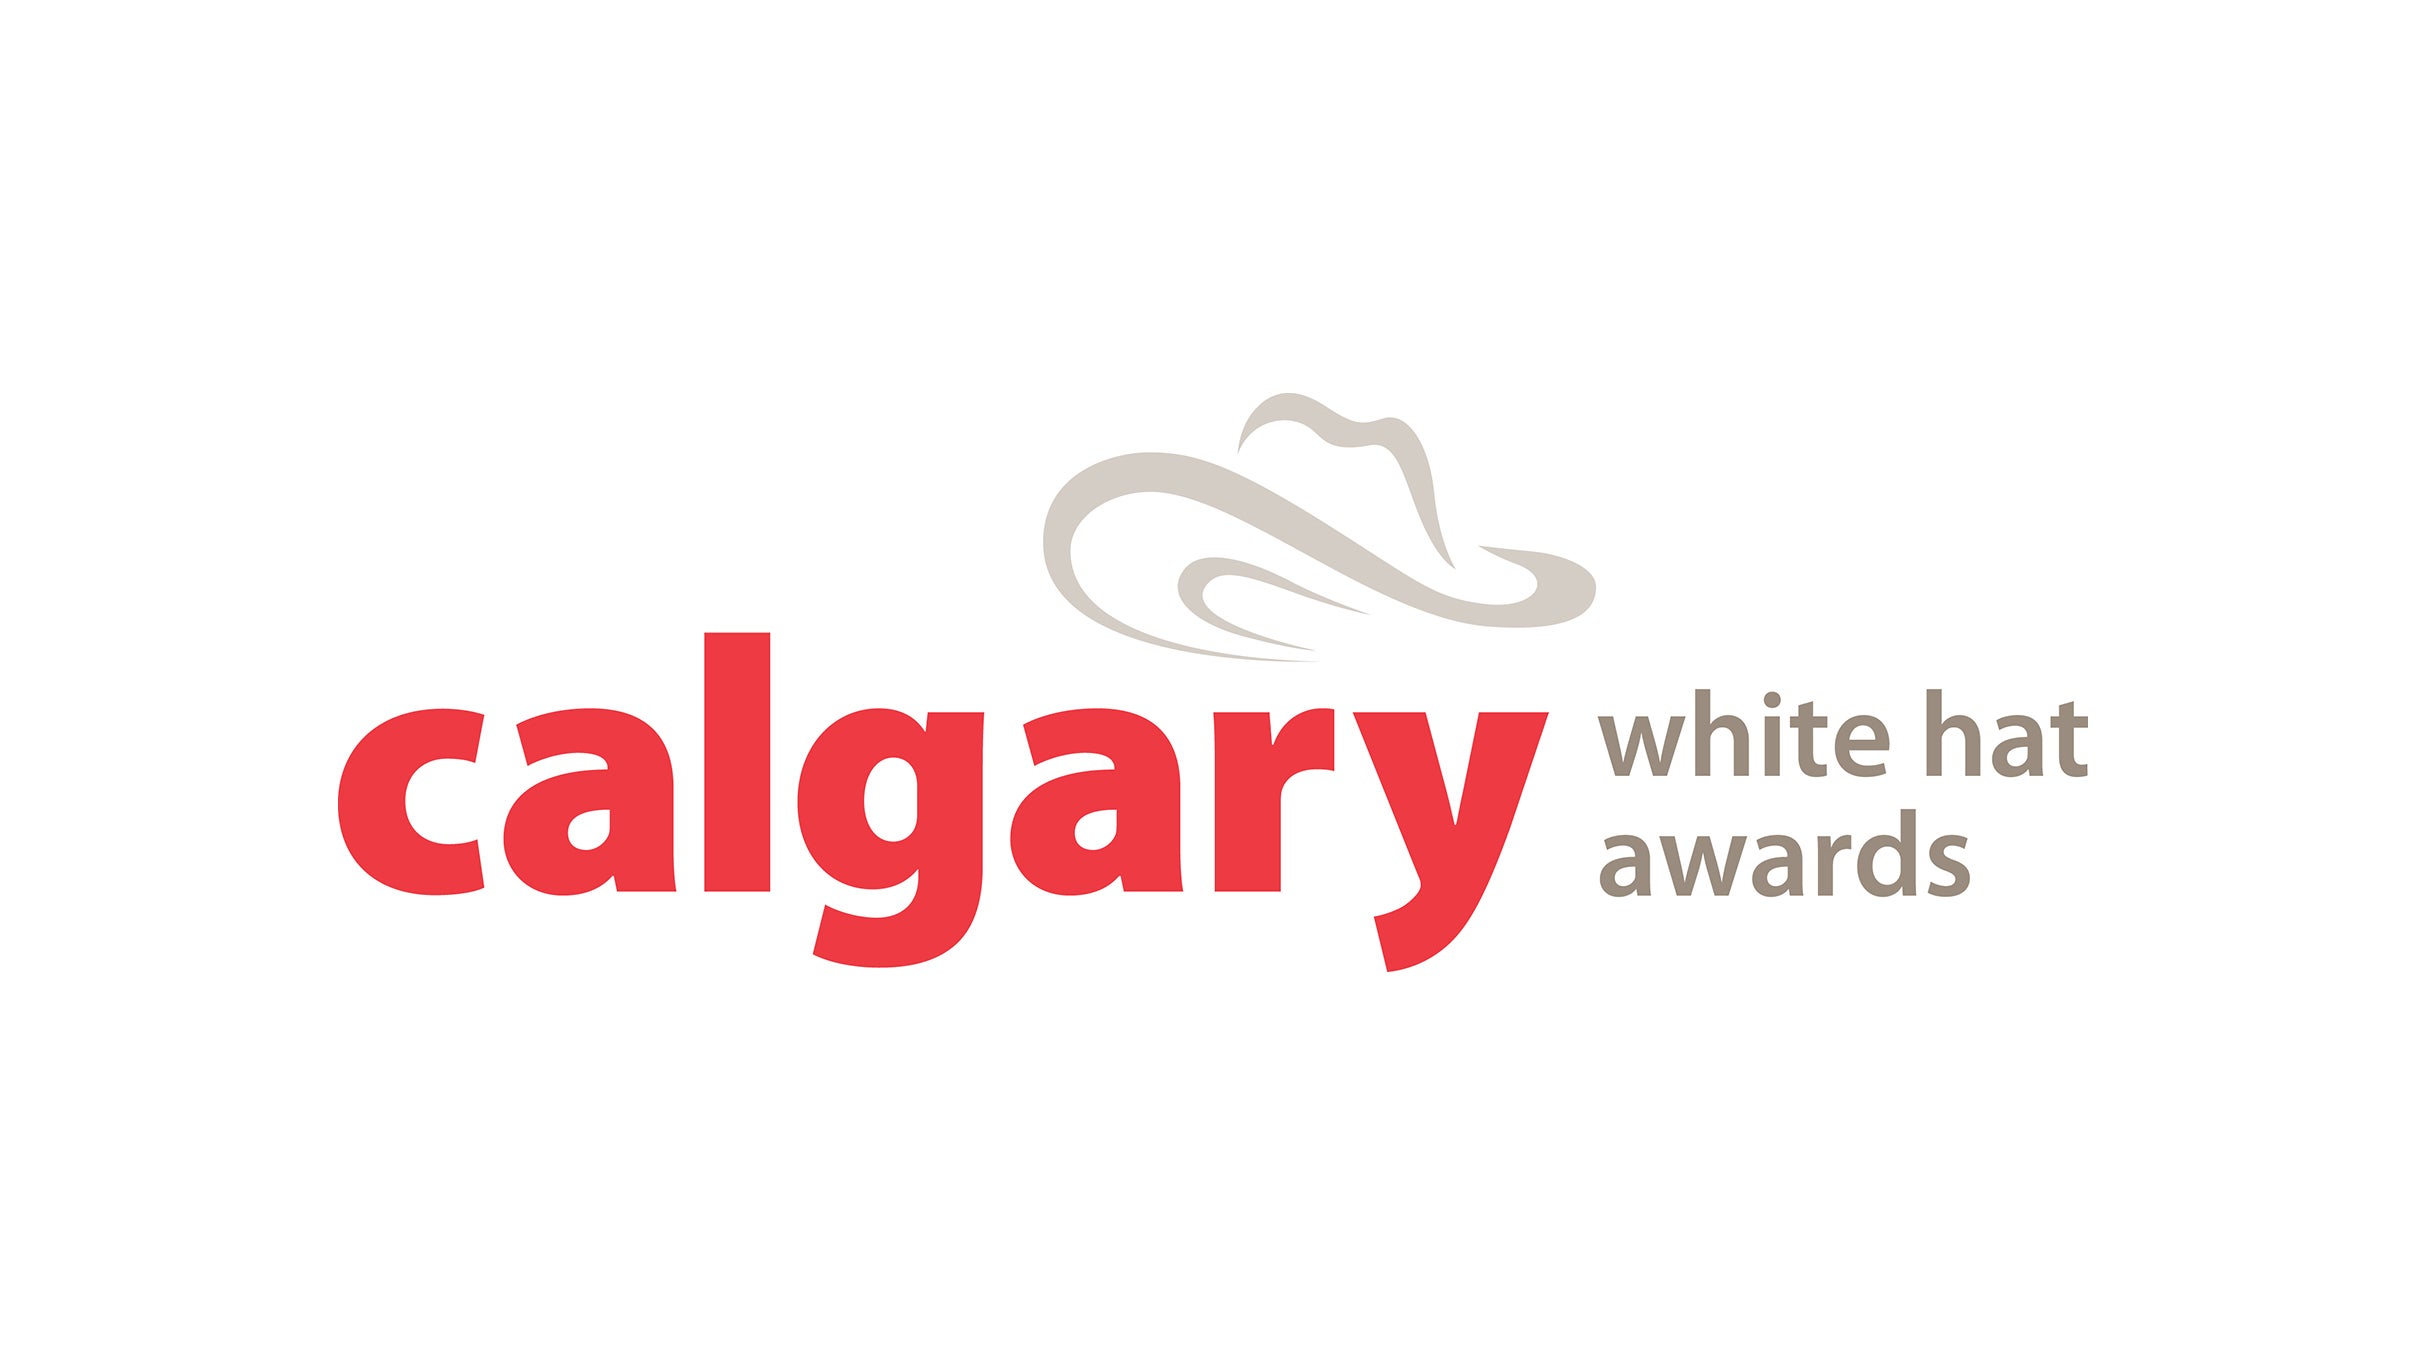 Calgary White Hat Awards presale information on freepresalepasswords.com